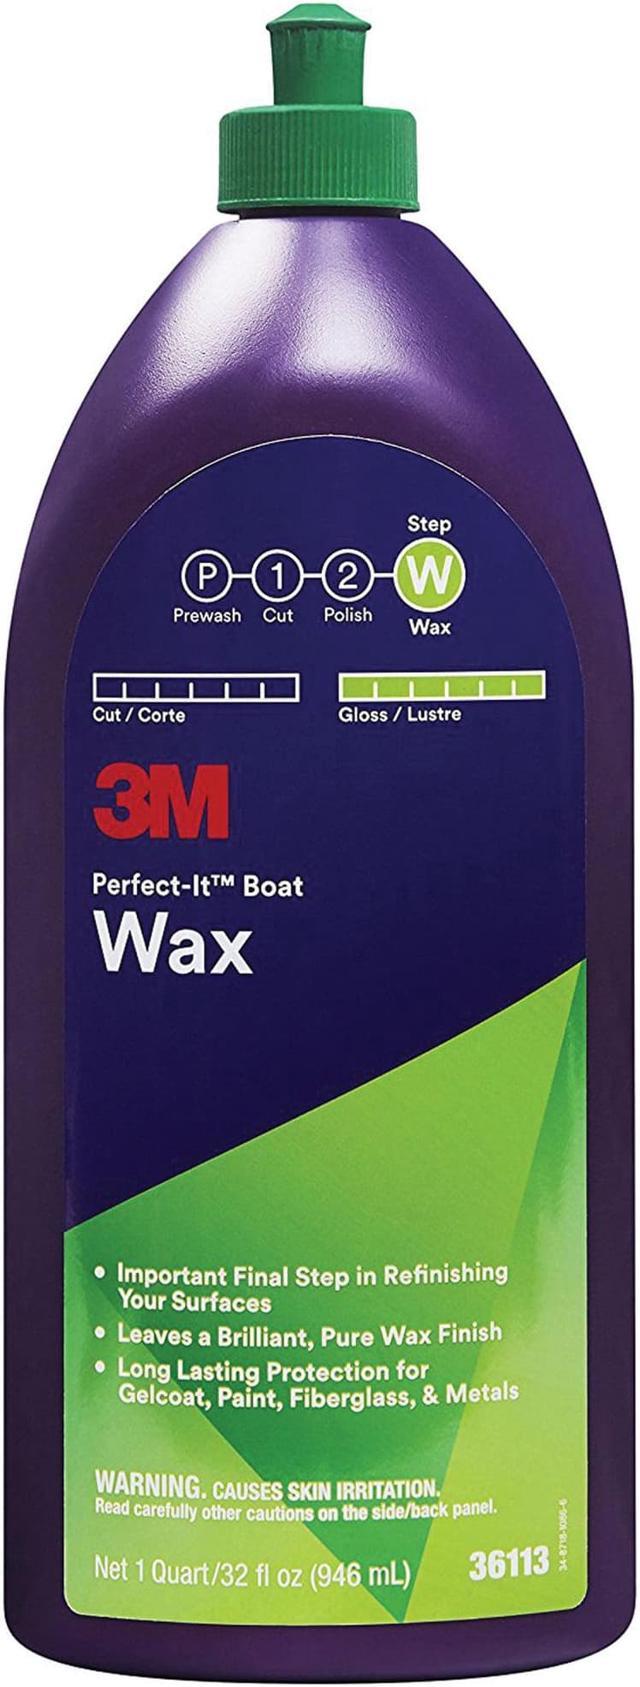 3M Perfect-It Boat Wax, 36113, 1 Quart, Contains Carnauba Wax